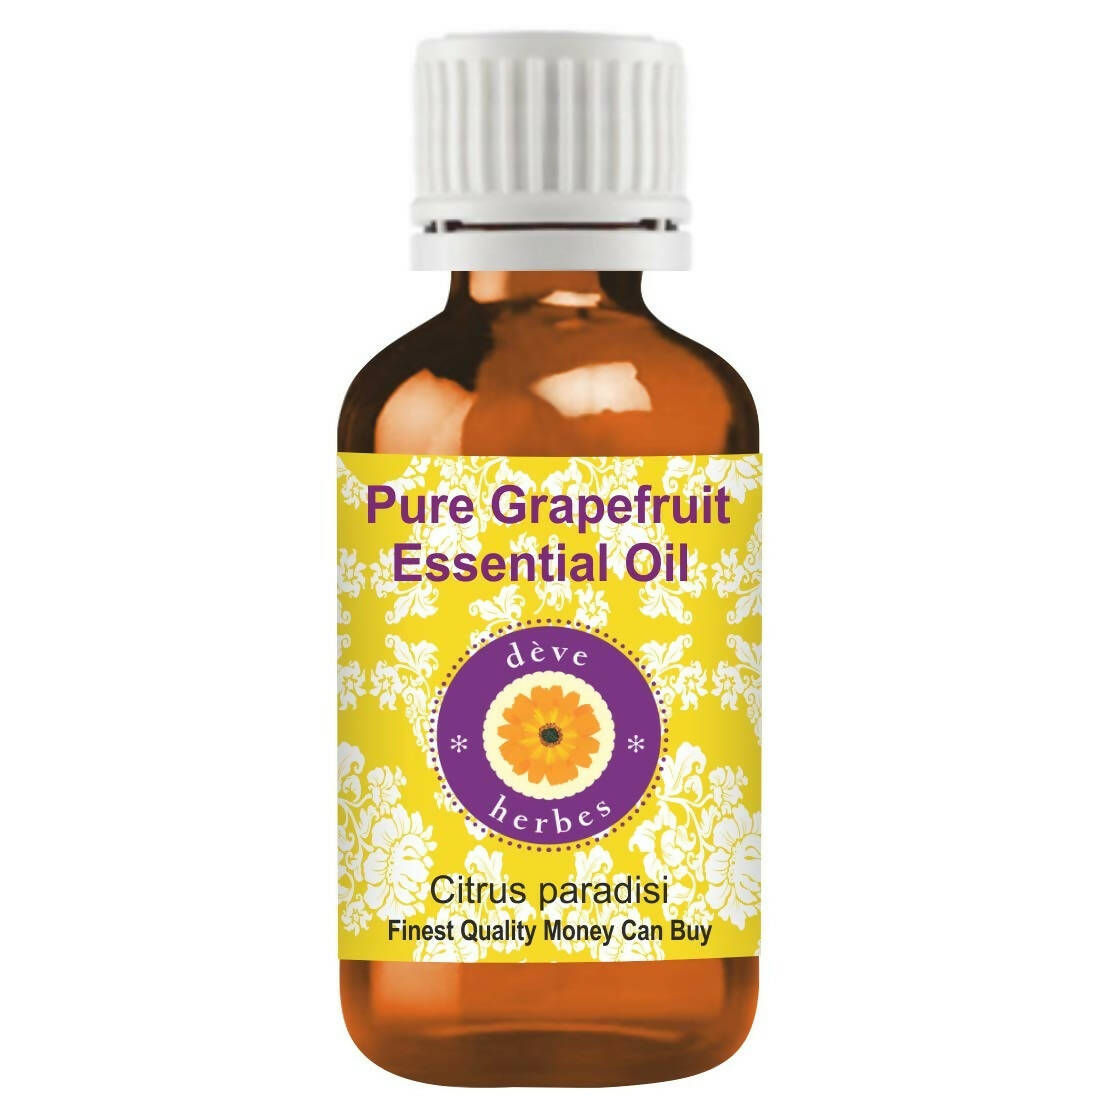 Deve Herbes Pure Grapefruit Essential Oil - BUDNEN